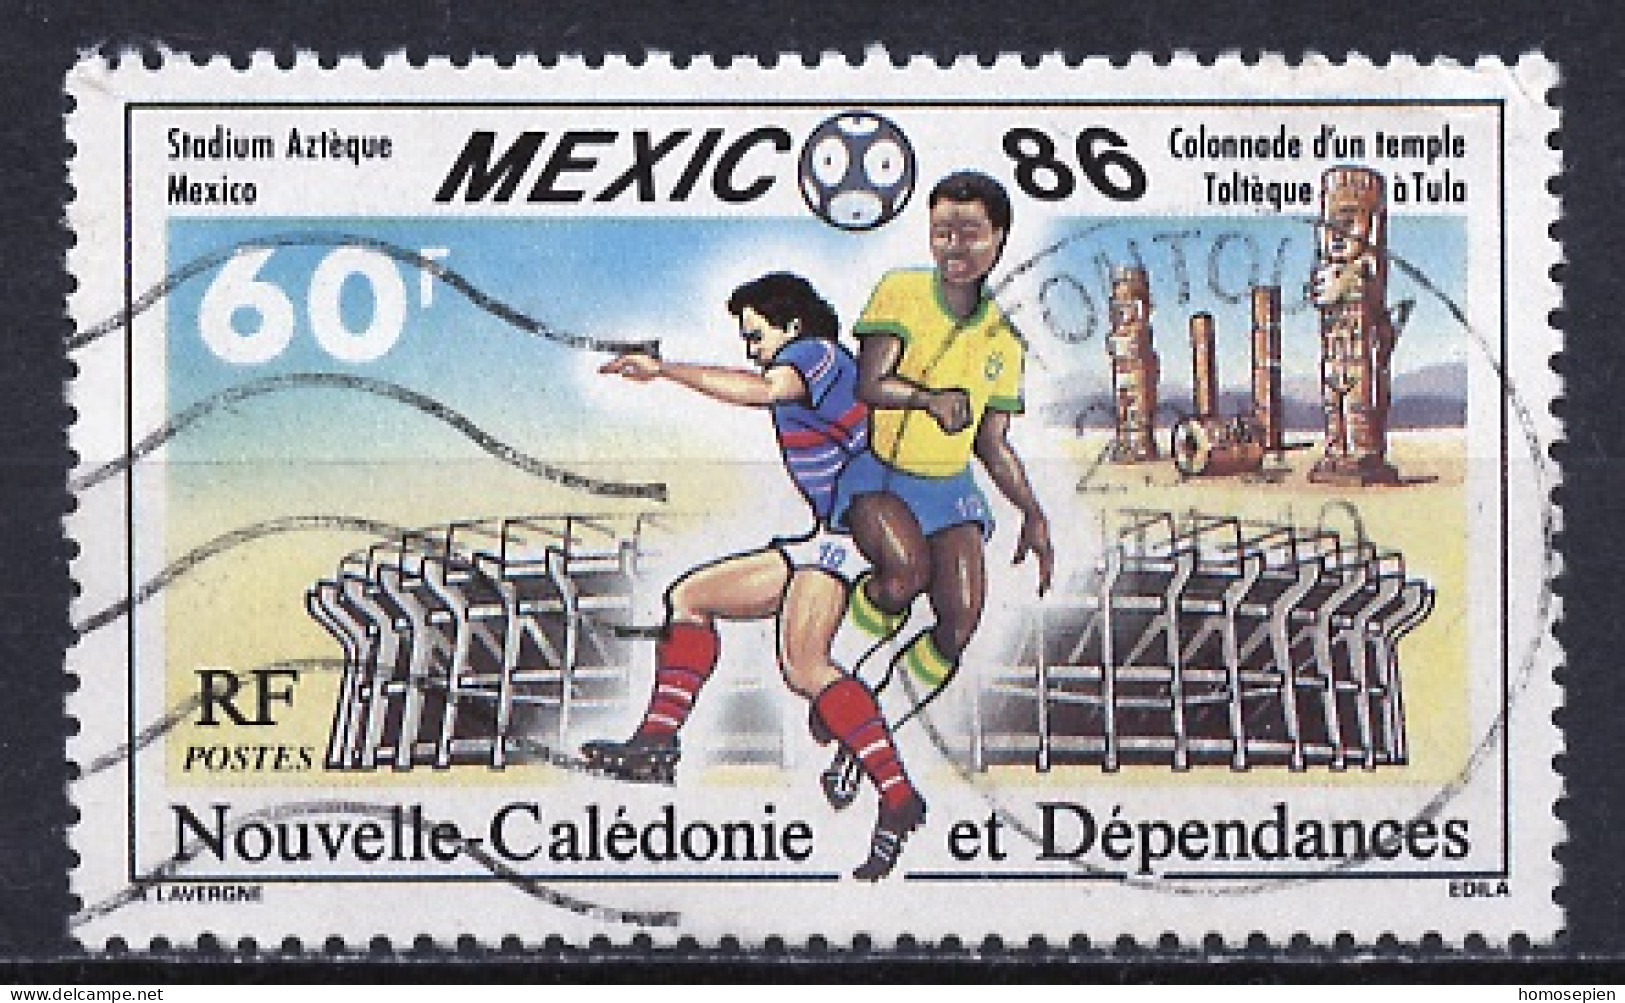 Nouvelle Calédonie - Neukaledonien - New Caledonia 1986 Y&T N°518 - Michel N°781 (o) - 60f Coupe Du Monde  De Football - Usados